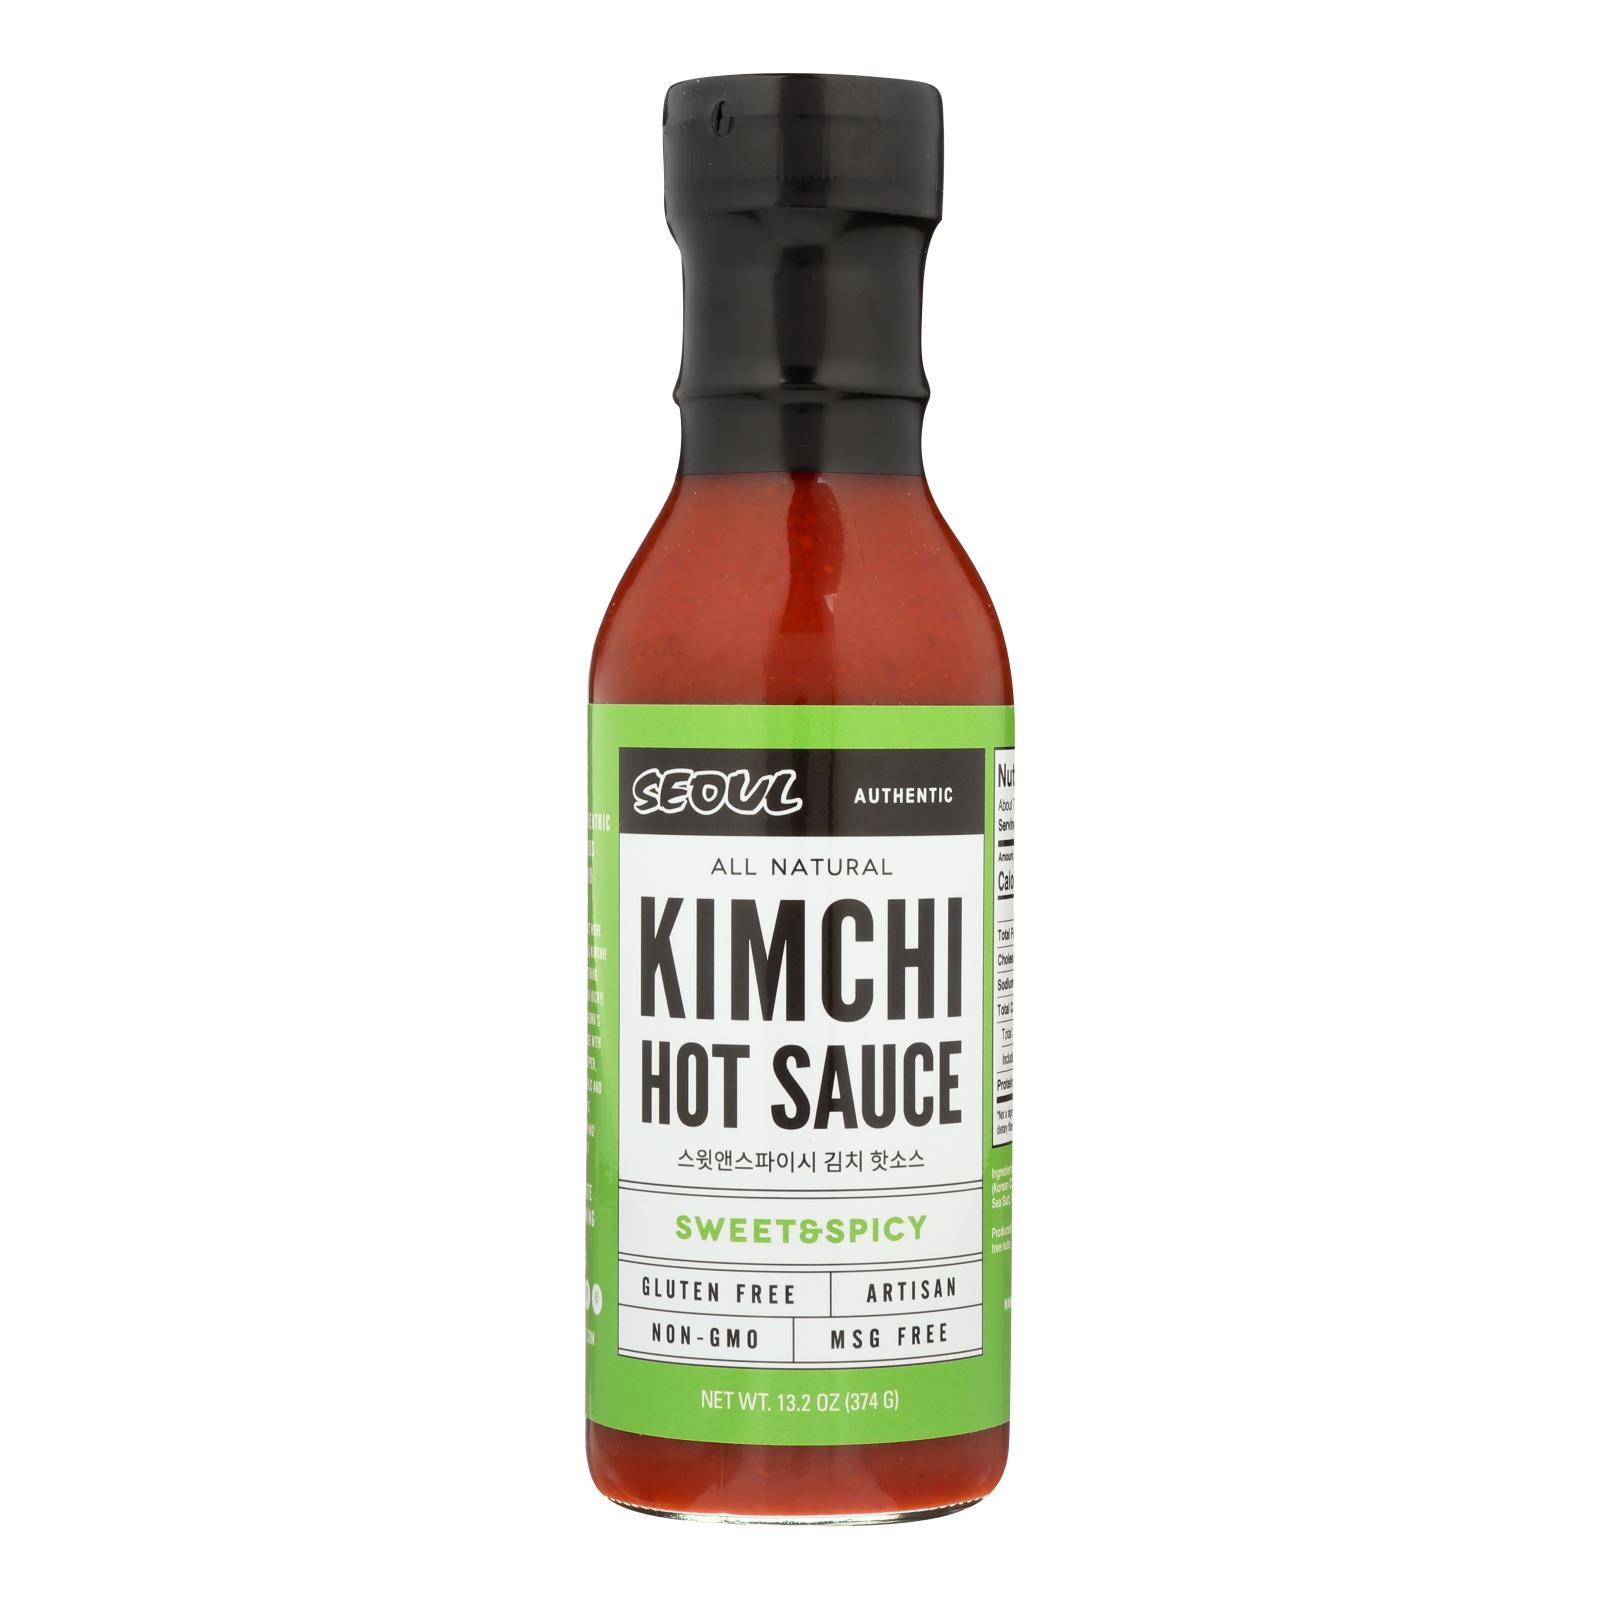 Seoul Sweet And Spicy Kimchi Hot Sauce - 6개 묶음상품 - 13.2 OZ